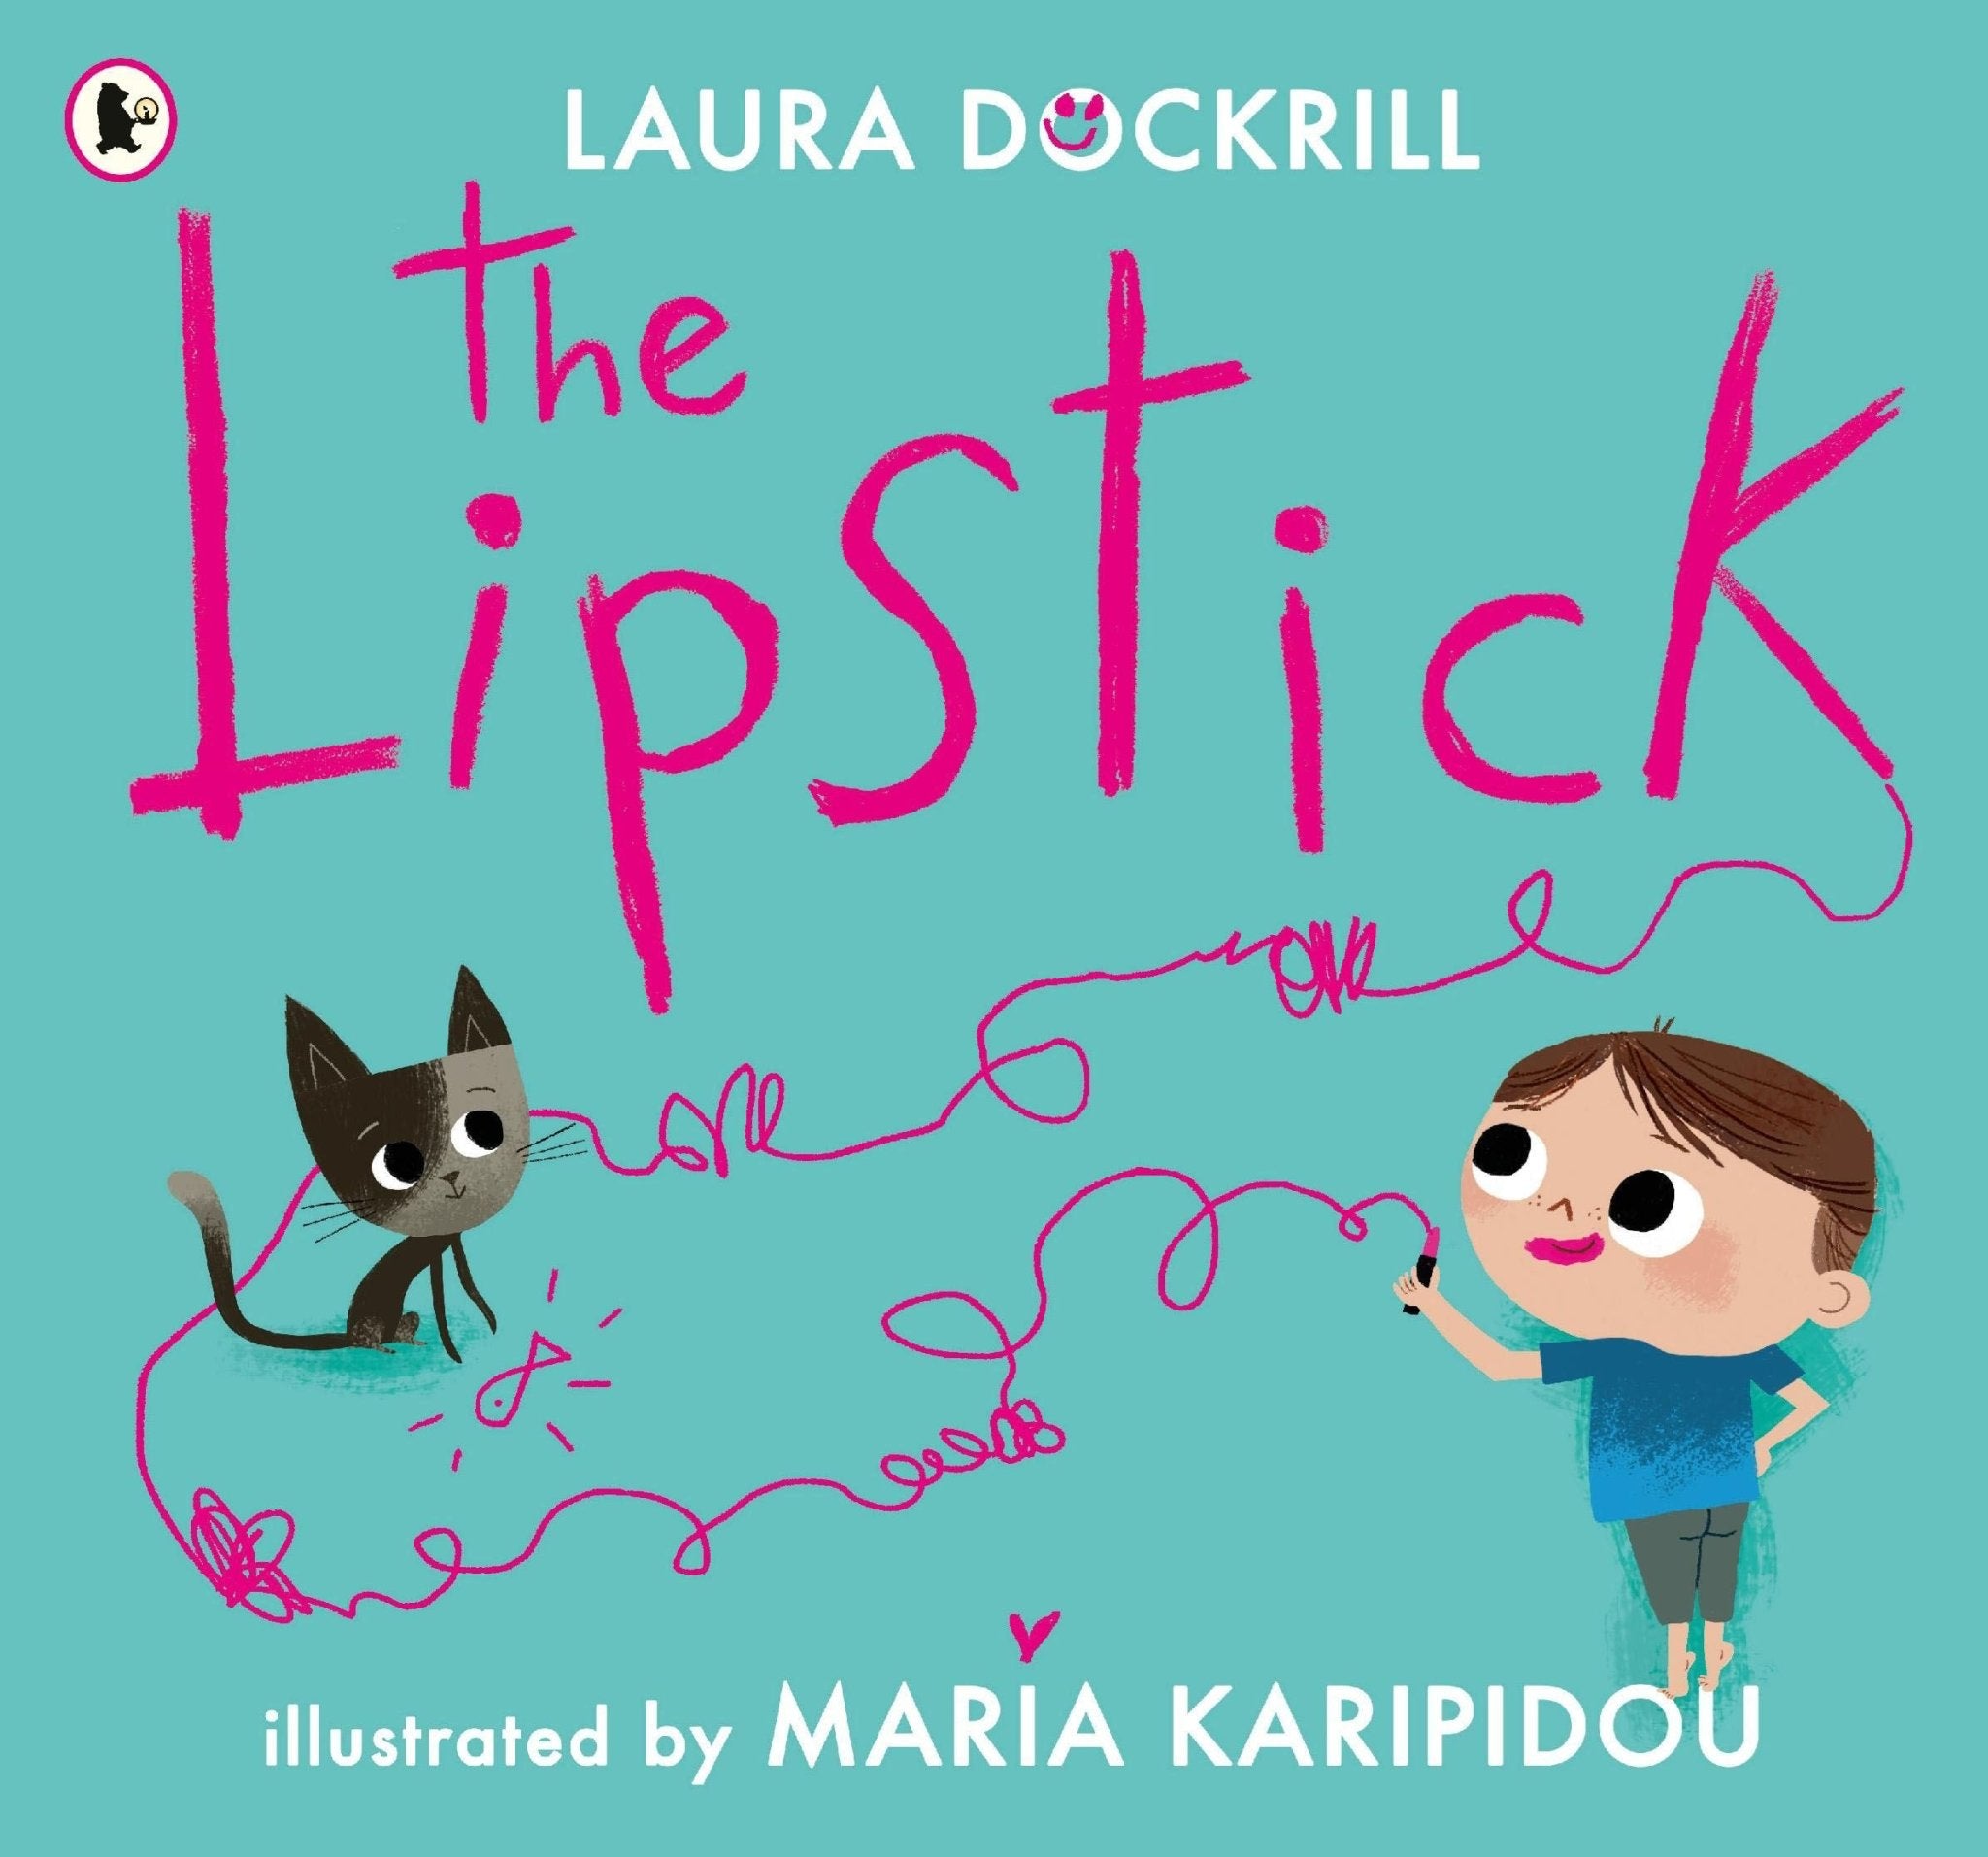 Maypole LaneBook - Lipstick - Maypole LaneMaypole LaneBook - Lipstick